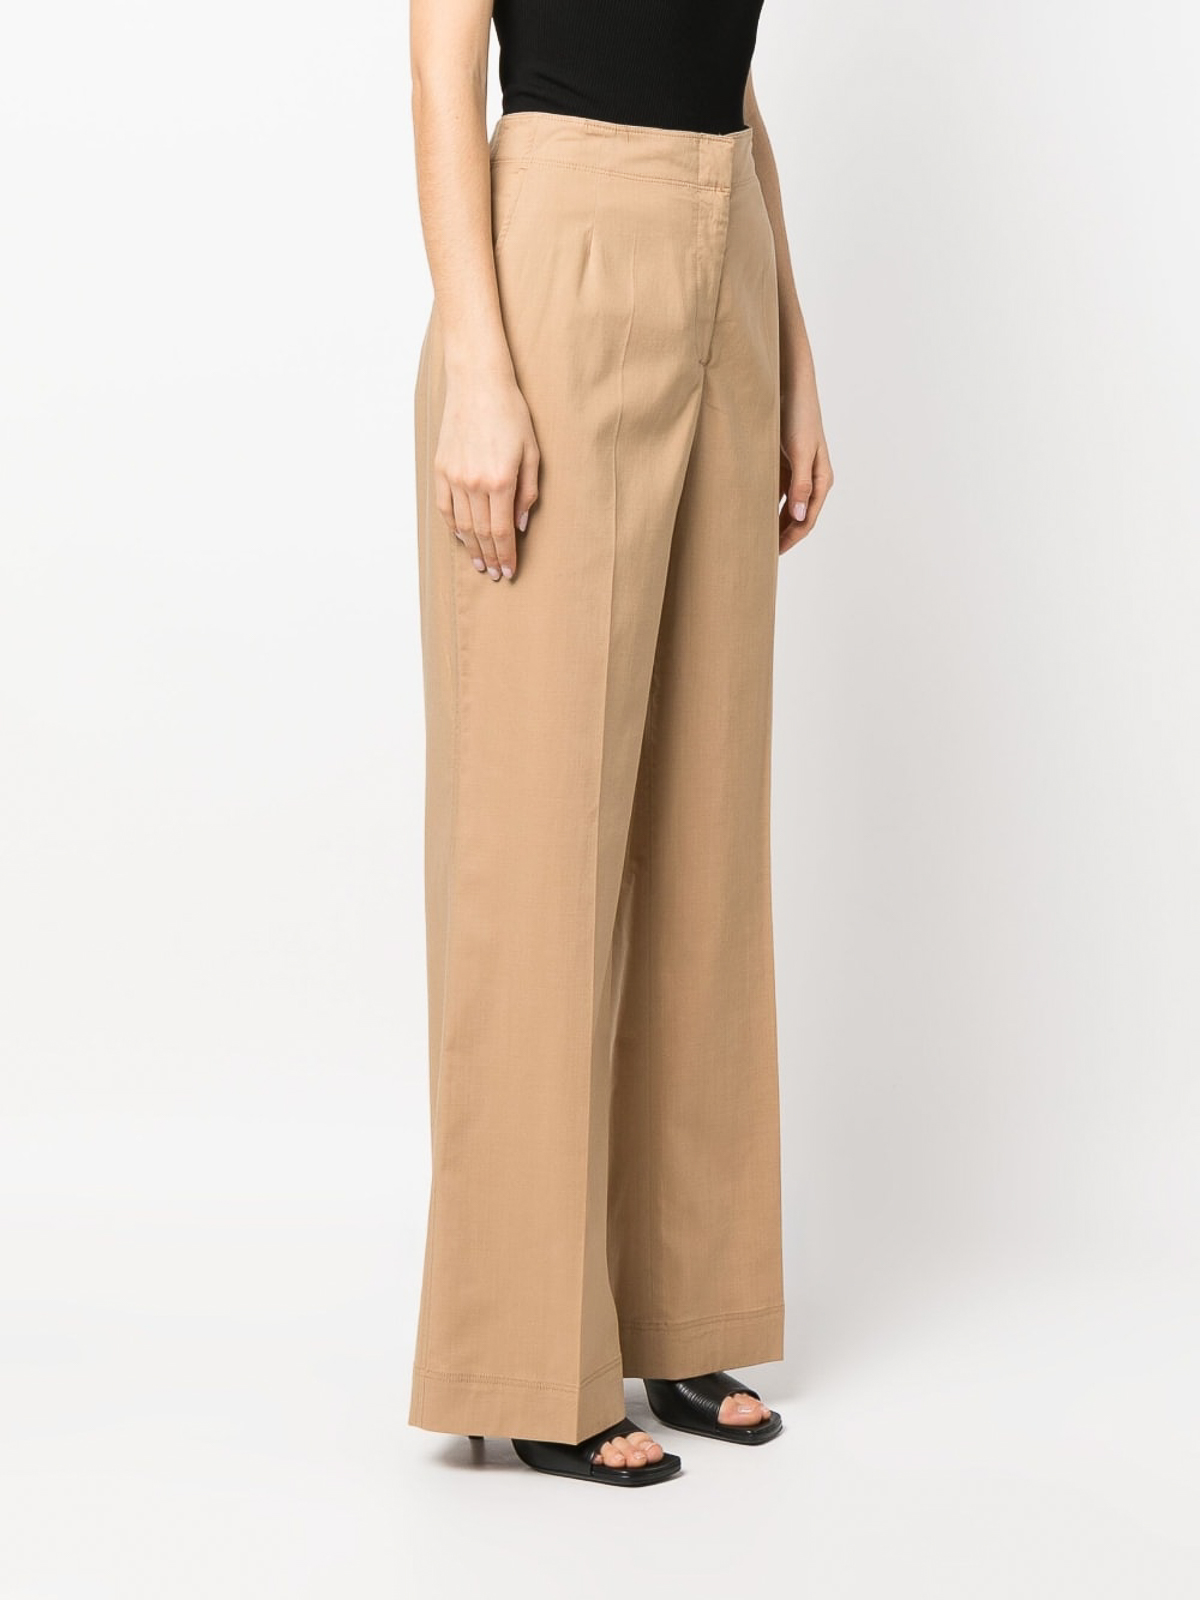 Calvin Klein Jayden Skinny Fit Stretch Dress Pant | Hamilton Place